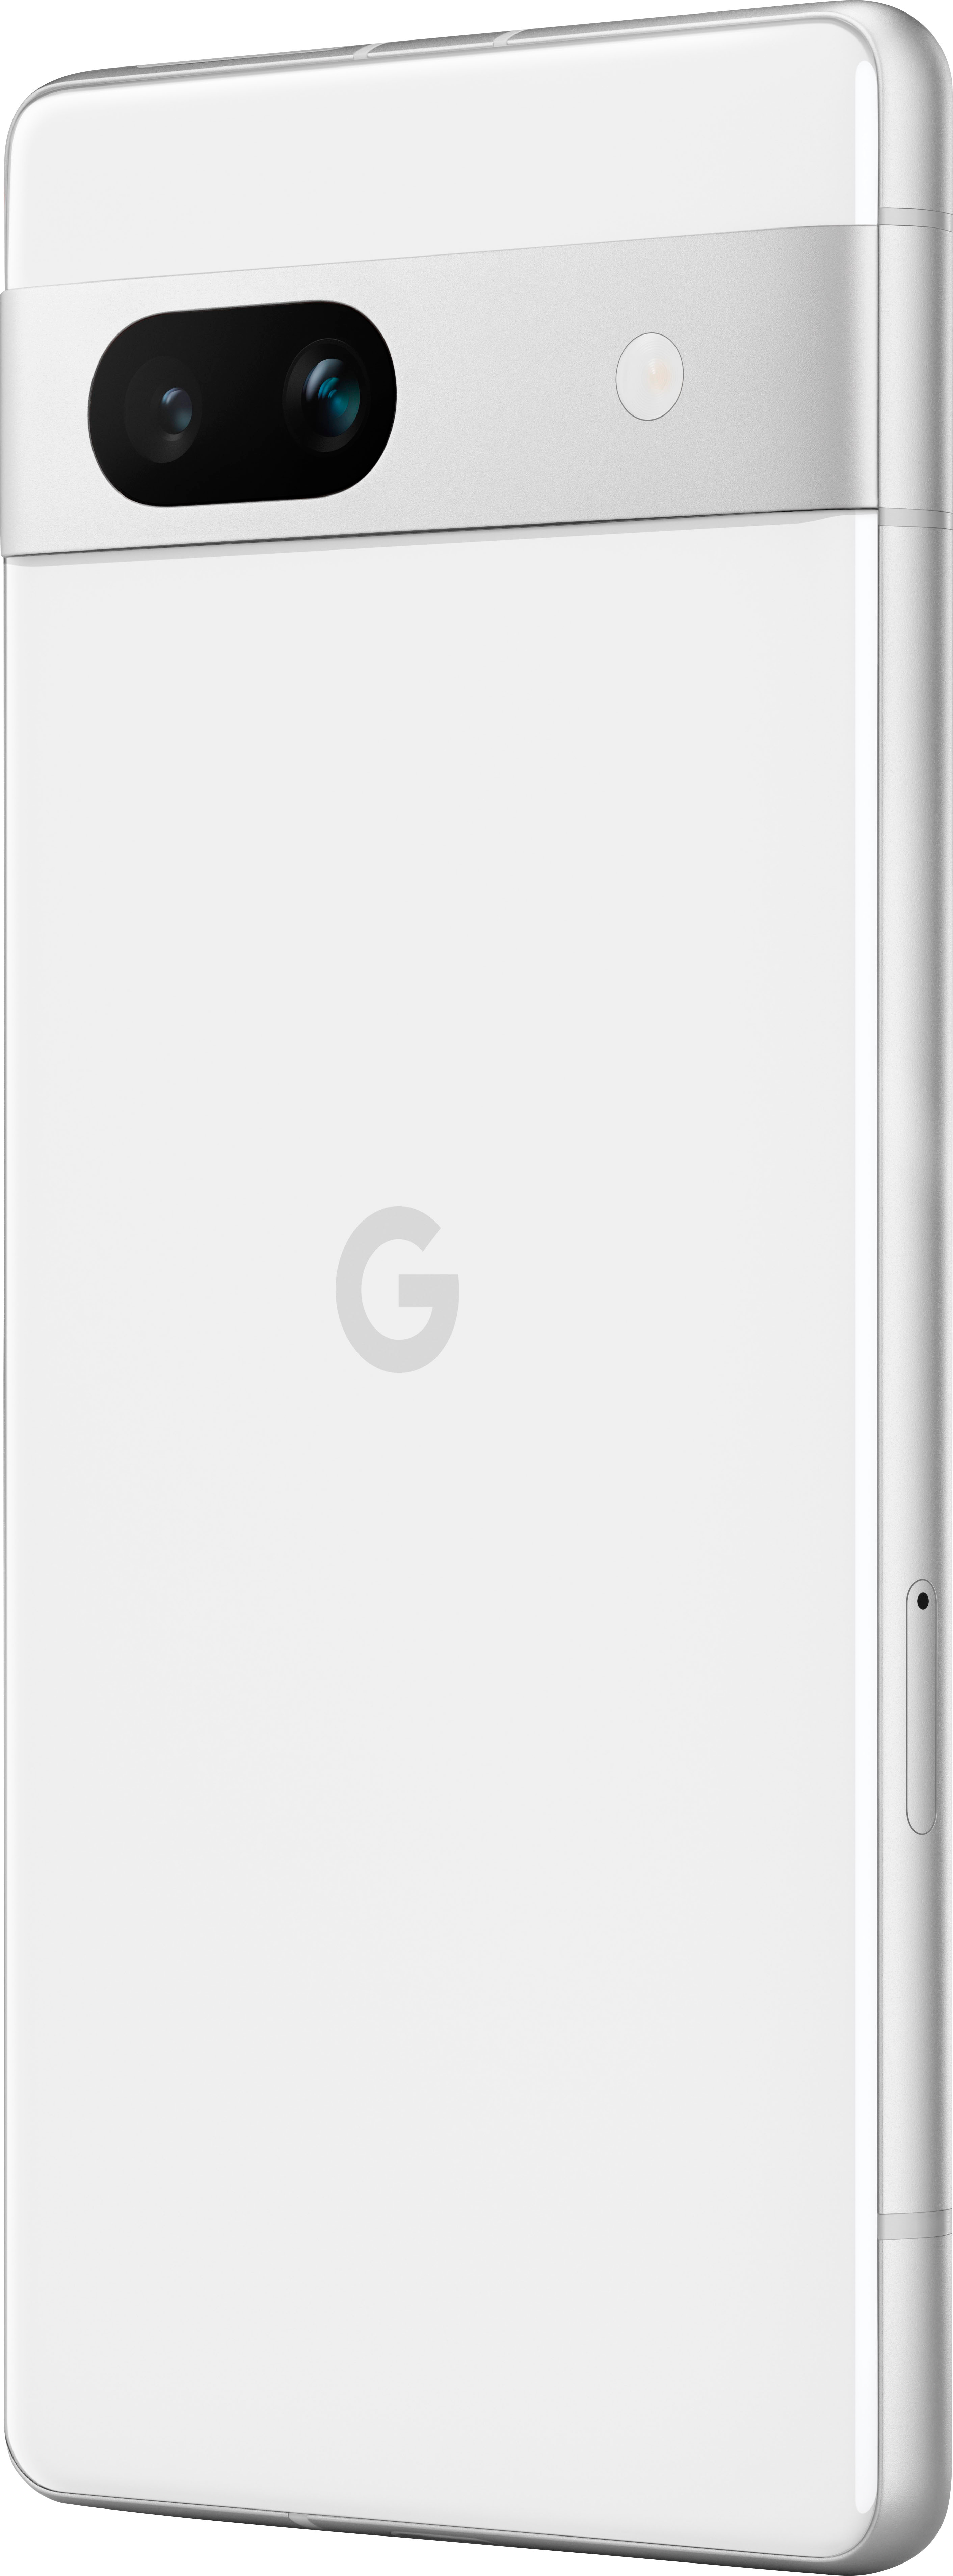 Google Pixel 7a - 128 GB - Snow - Unlocked